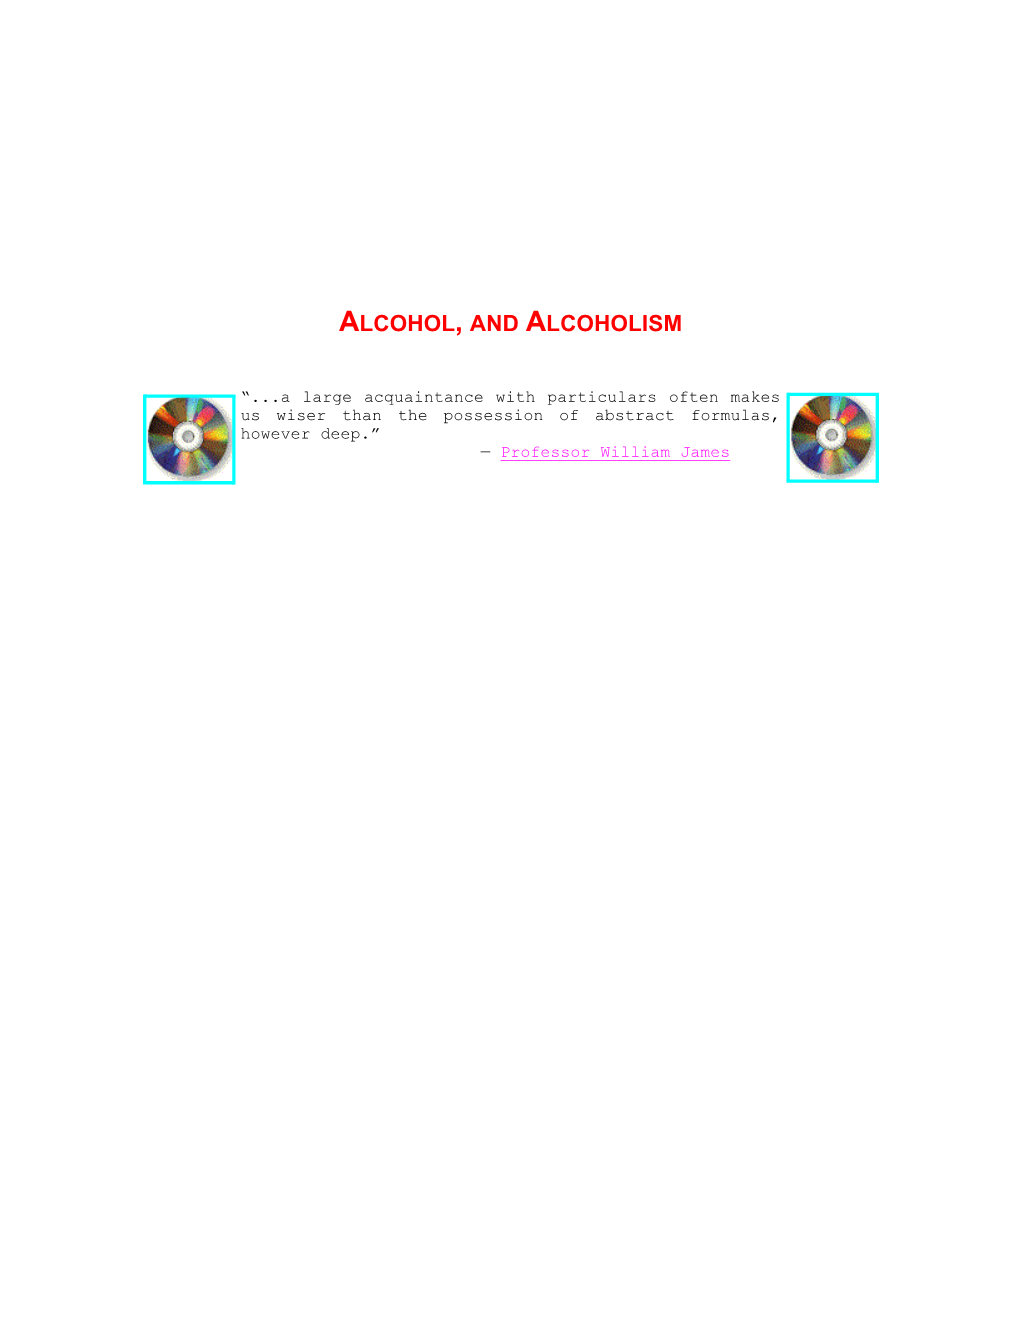 Alcohol, and Alcoholism